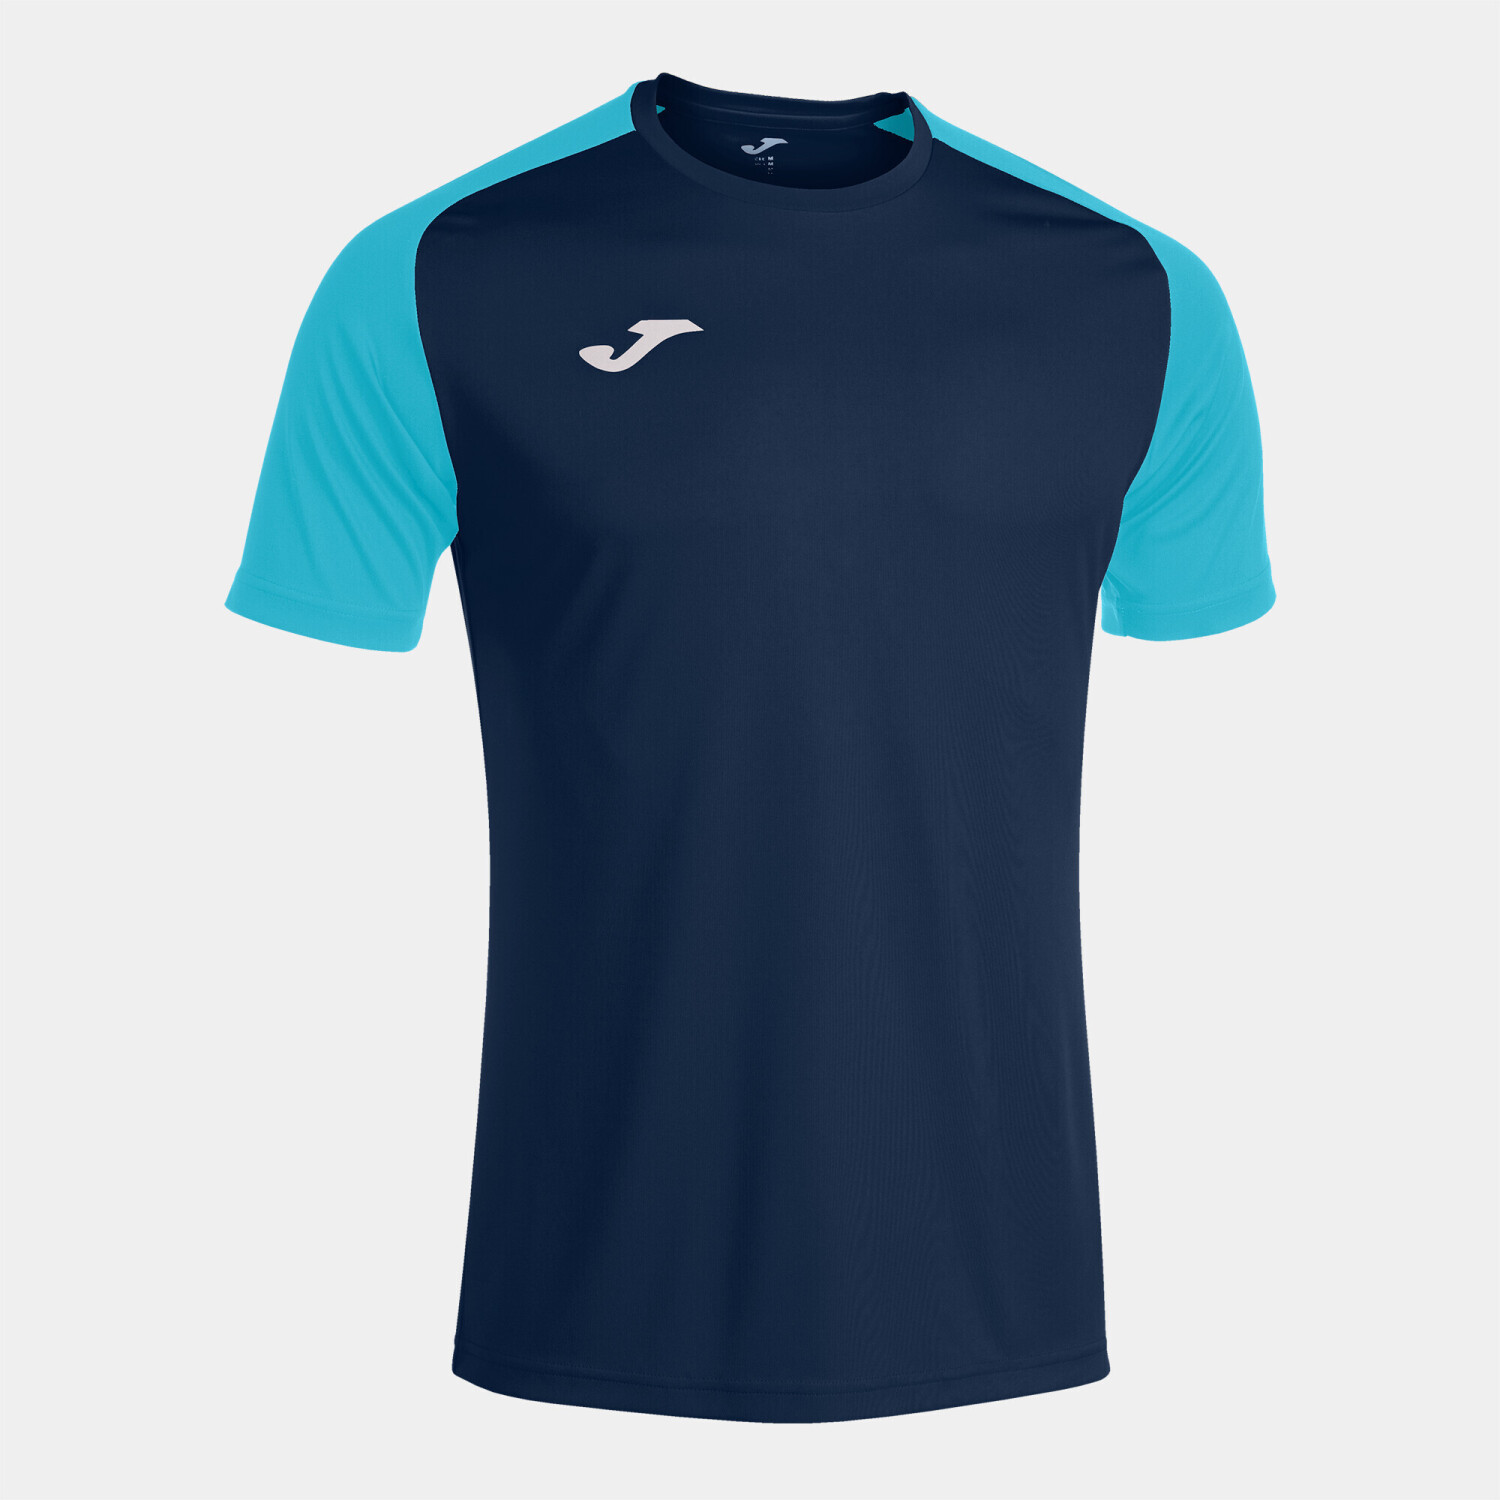 Photos - Football Kit Joma Academy IV Shirt  marine blue/turquoise (101968k)